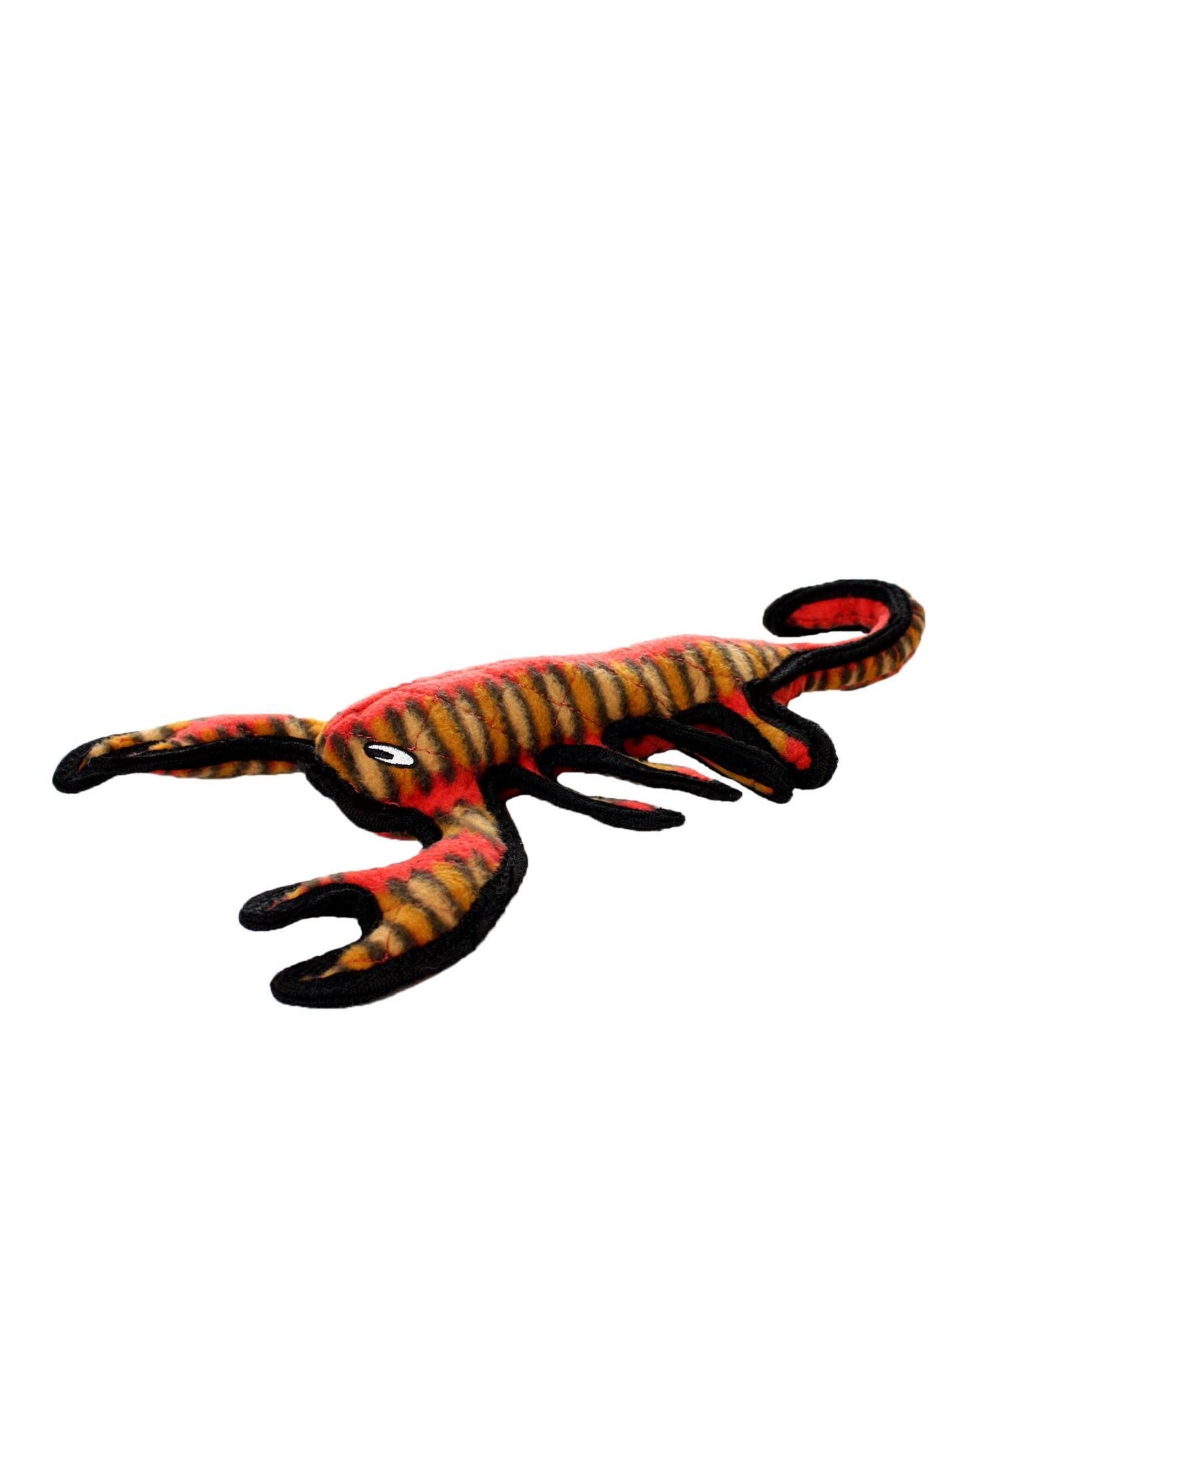 Desert Scorpion, Dog Toy - Medium Brown